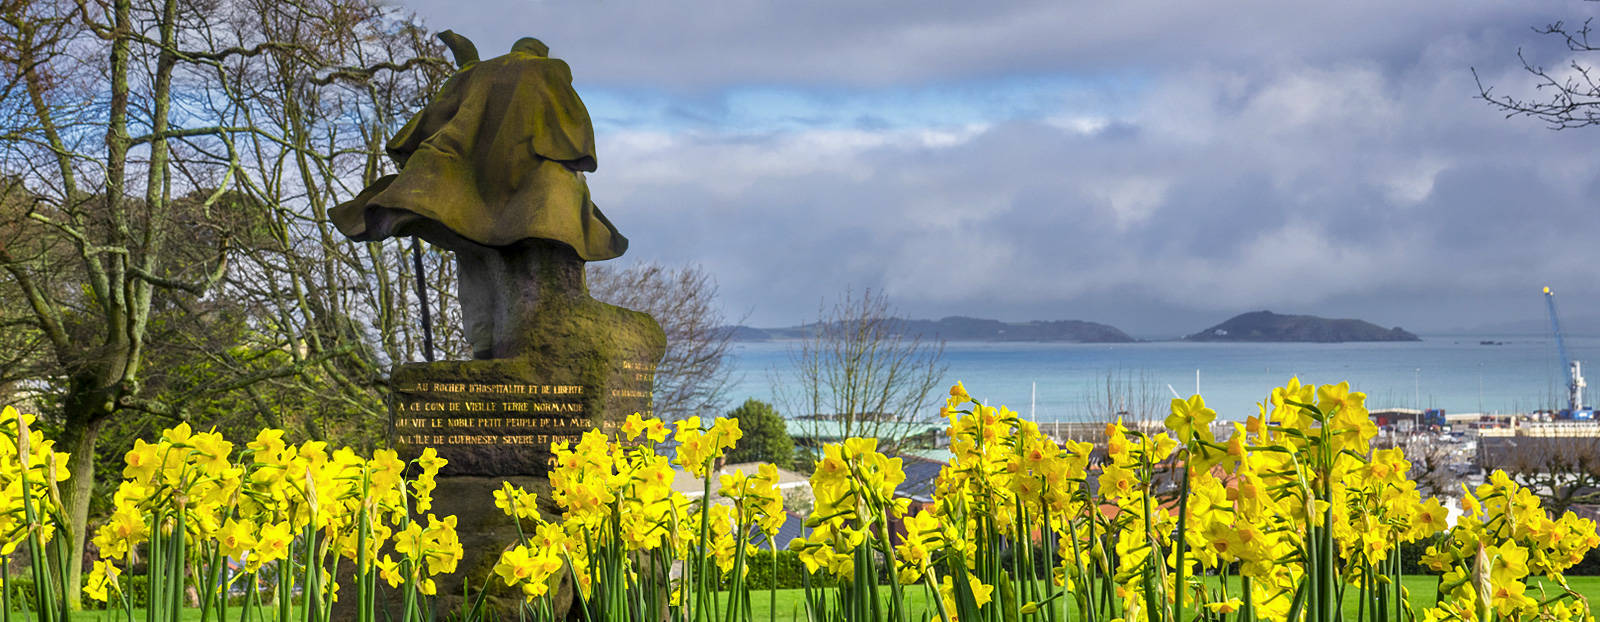 Victor Hugo statue amongst spring daffodils